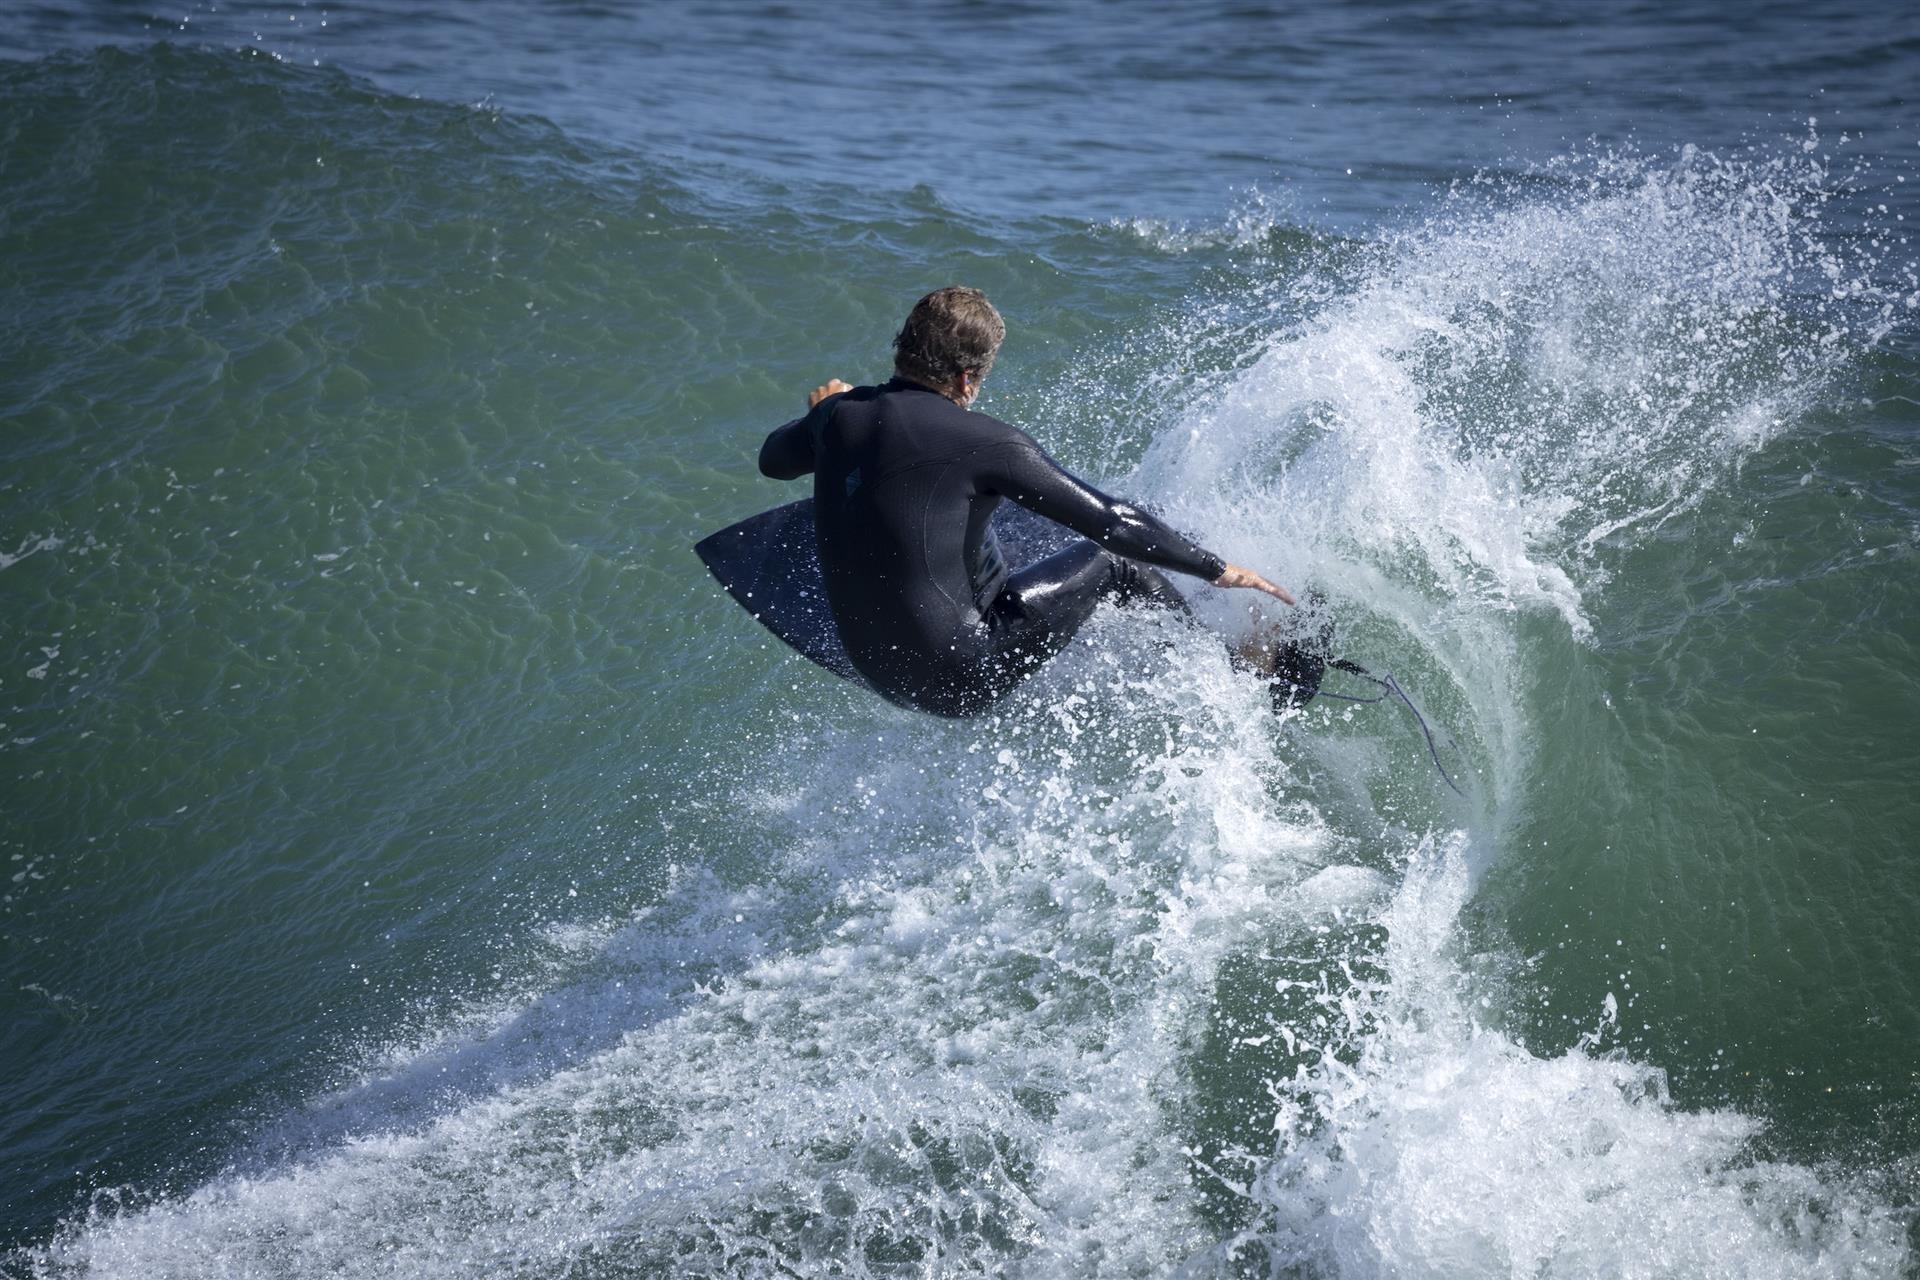 Surfer catches a wave